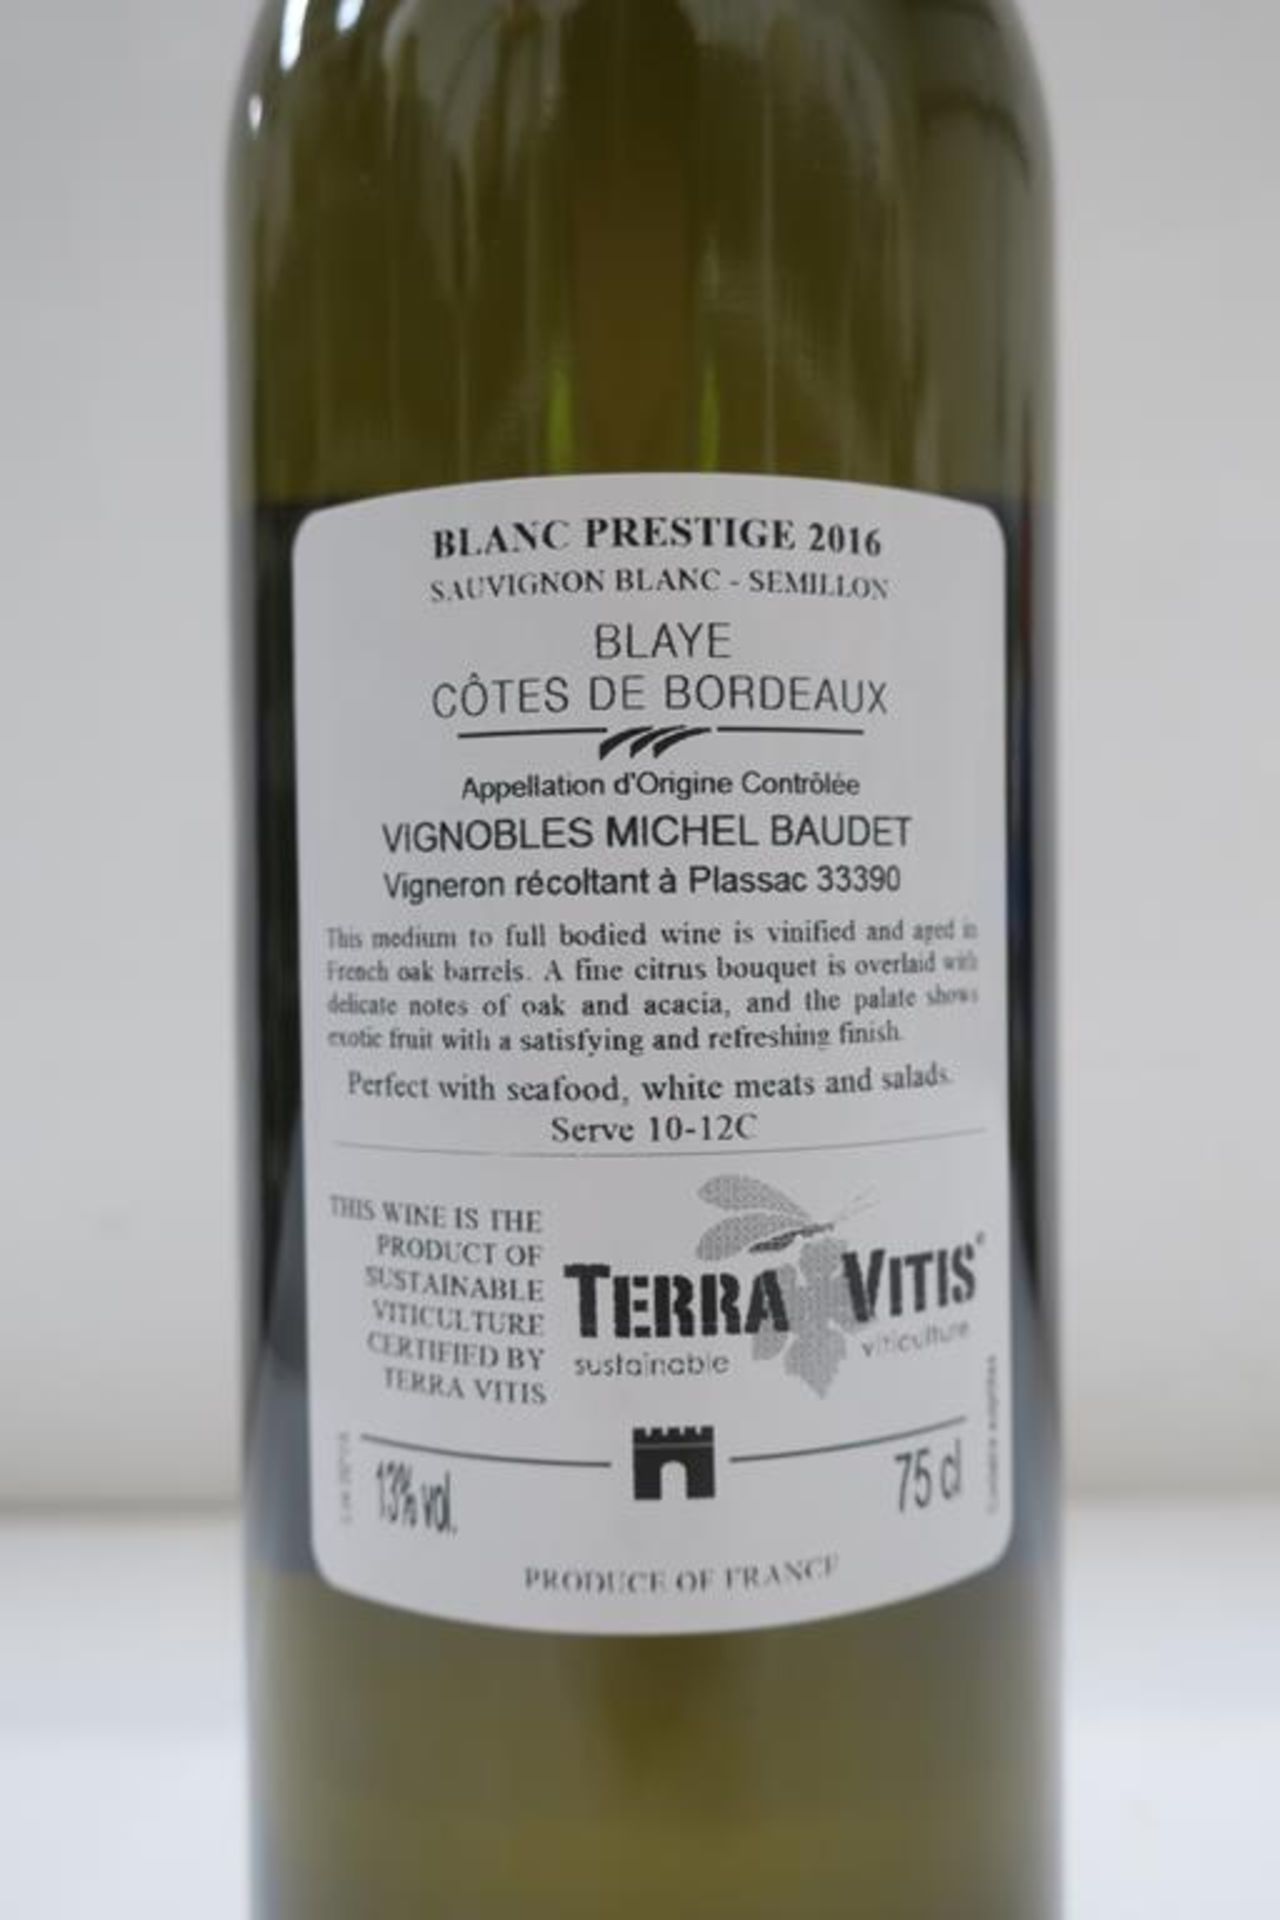 12 x Bottles of Monconseil-Gazin 'Blaye Prestige Blanc' 2016 White Wine - Image 2 of 2